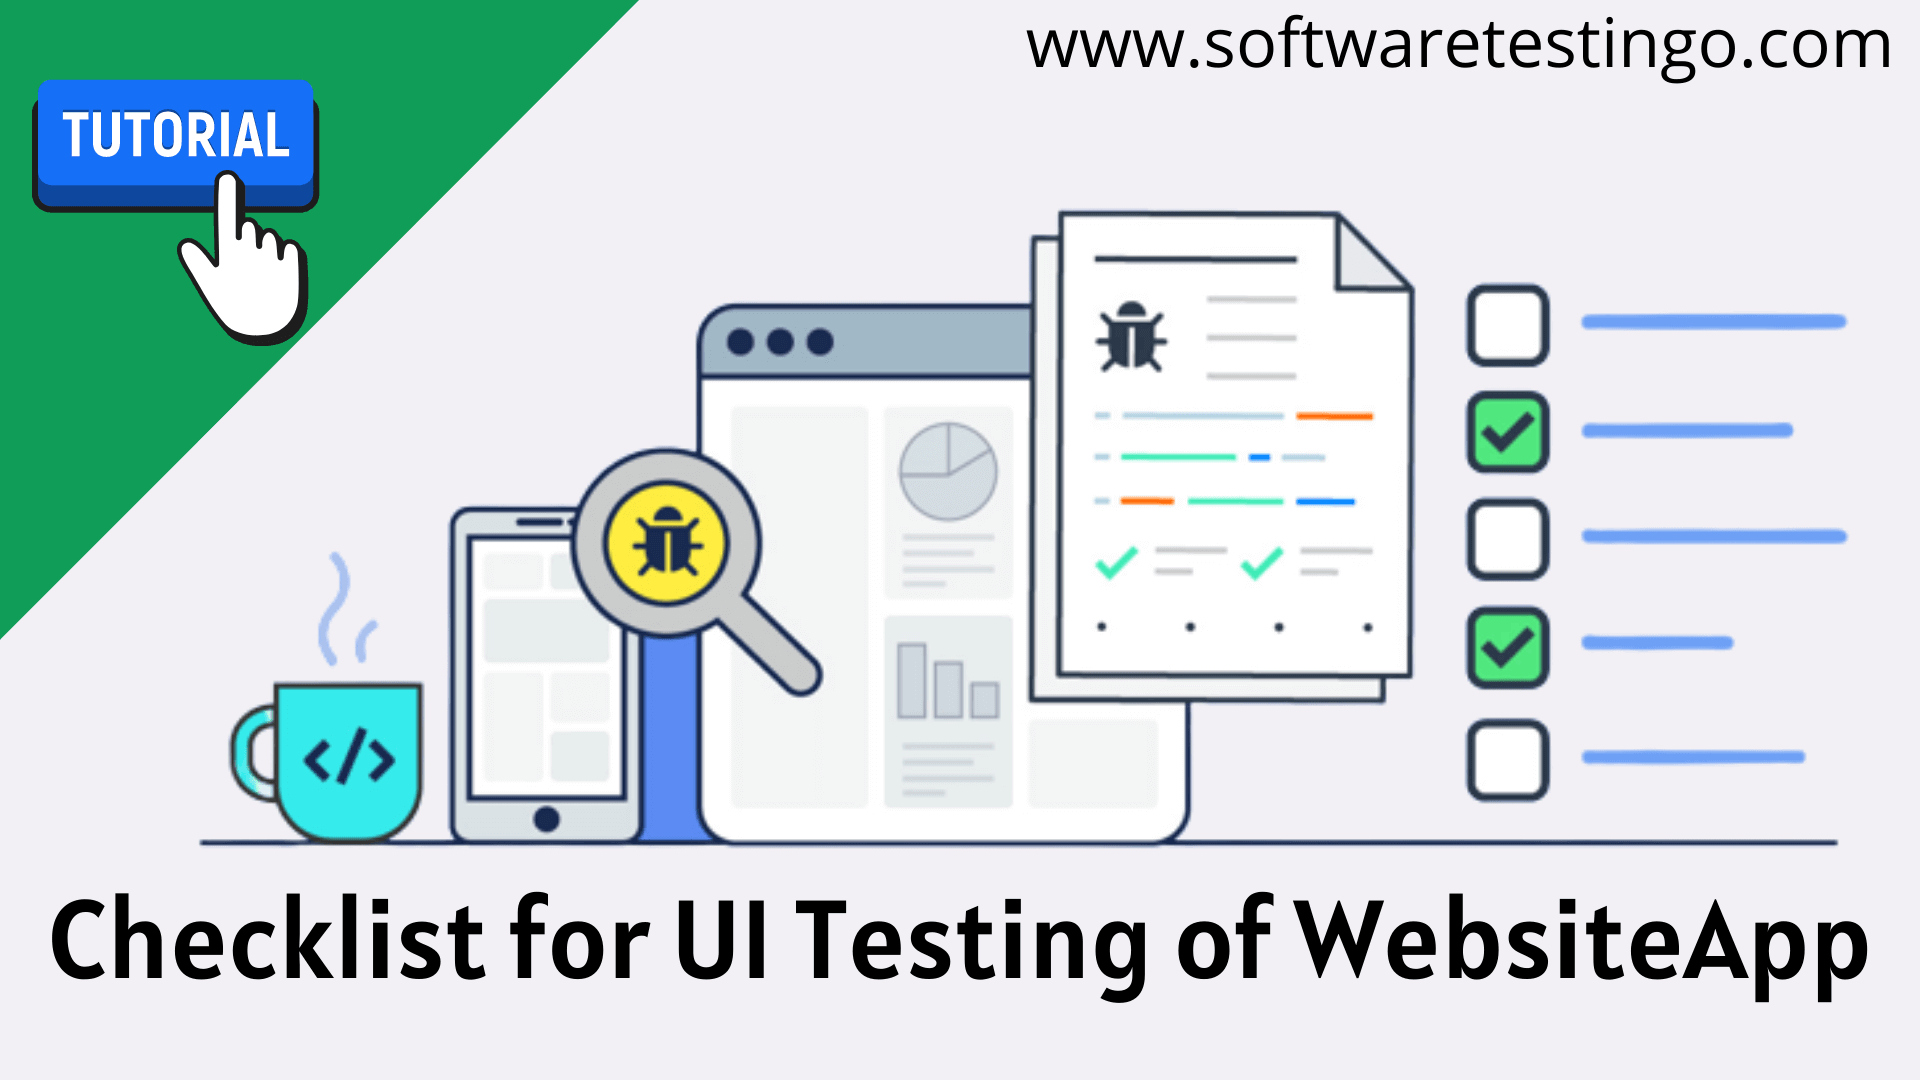 Checklist for UI Testing of WebsiteApp